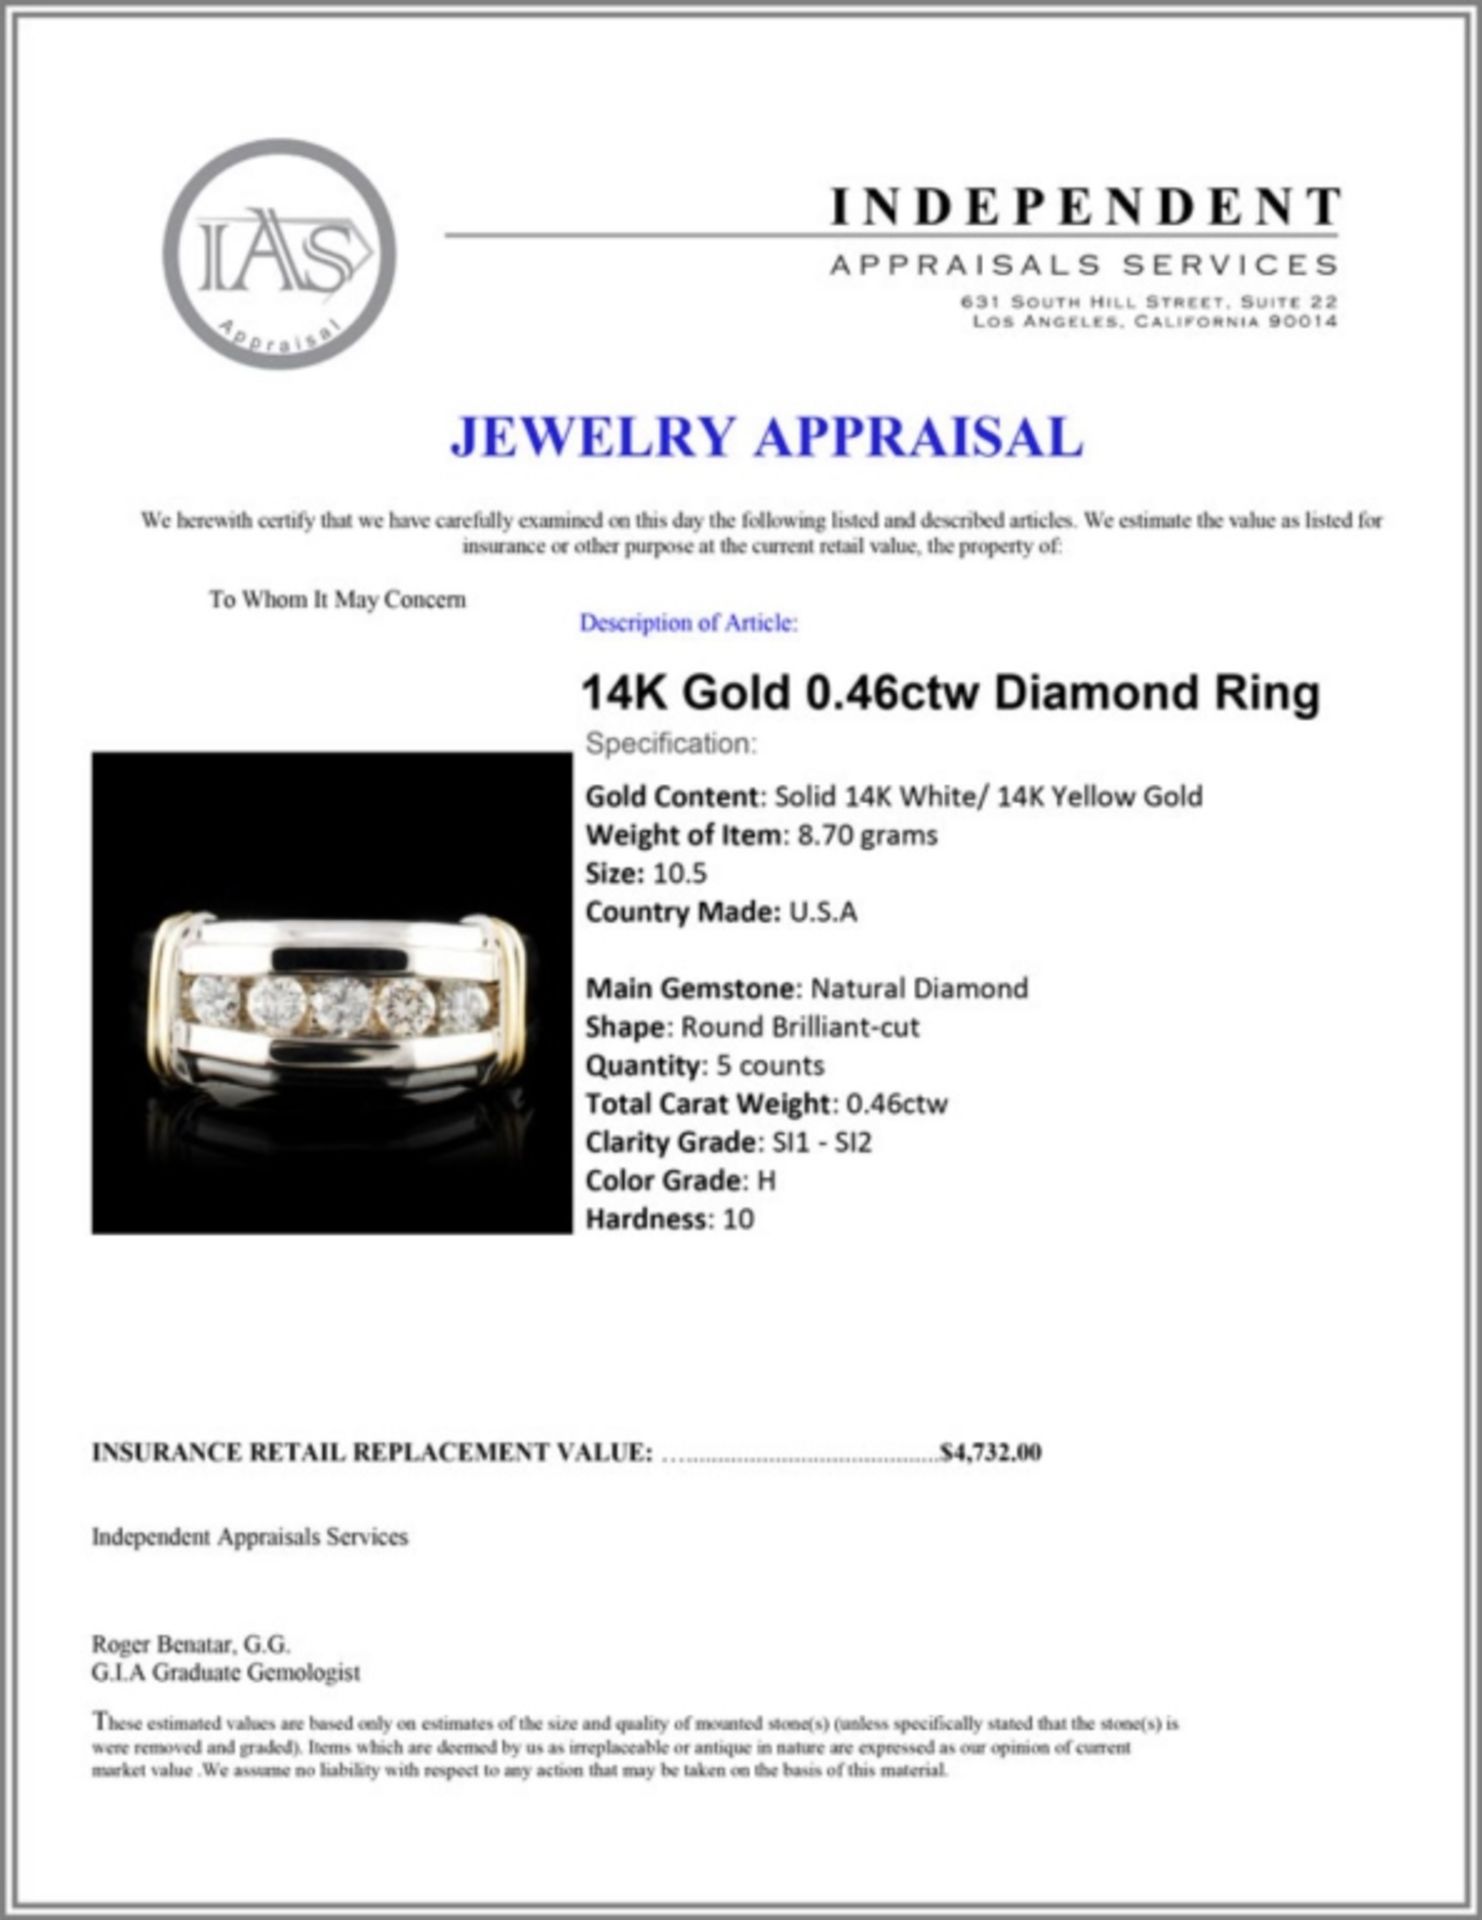 14K Gold 0.46ctw Diamond Ring - Image 4 of 4